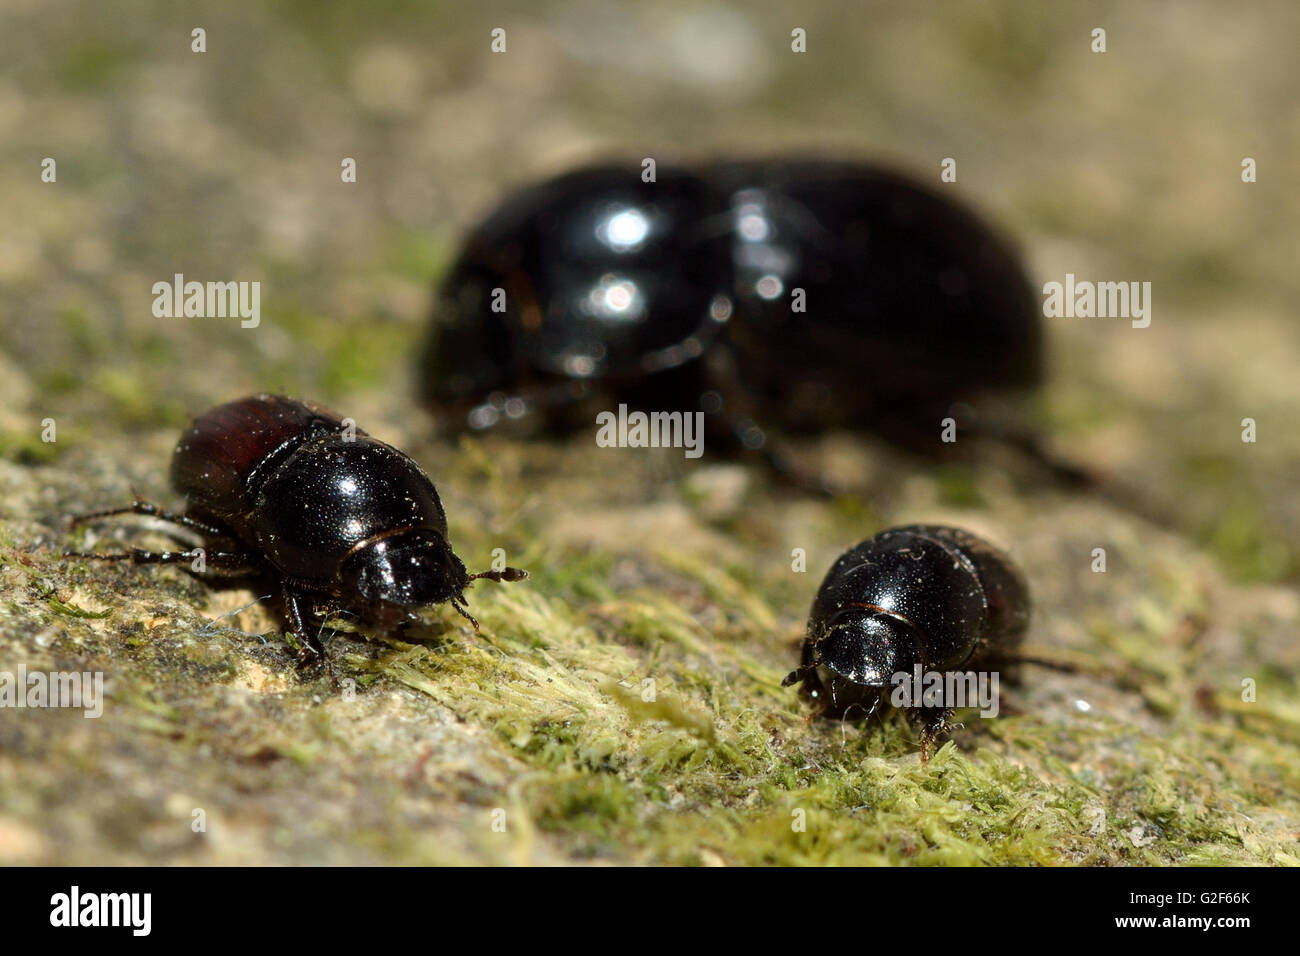 Comparison of Aphodius dung beetles. Aphodius depressus (left), A. fossor (centre) and A. haemorrhoidalis (right) Stock Photo